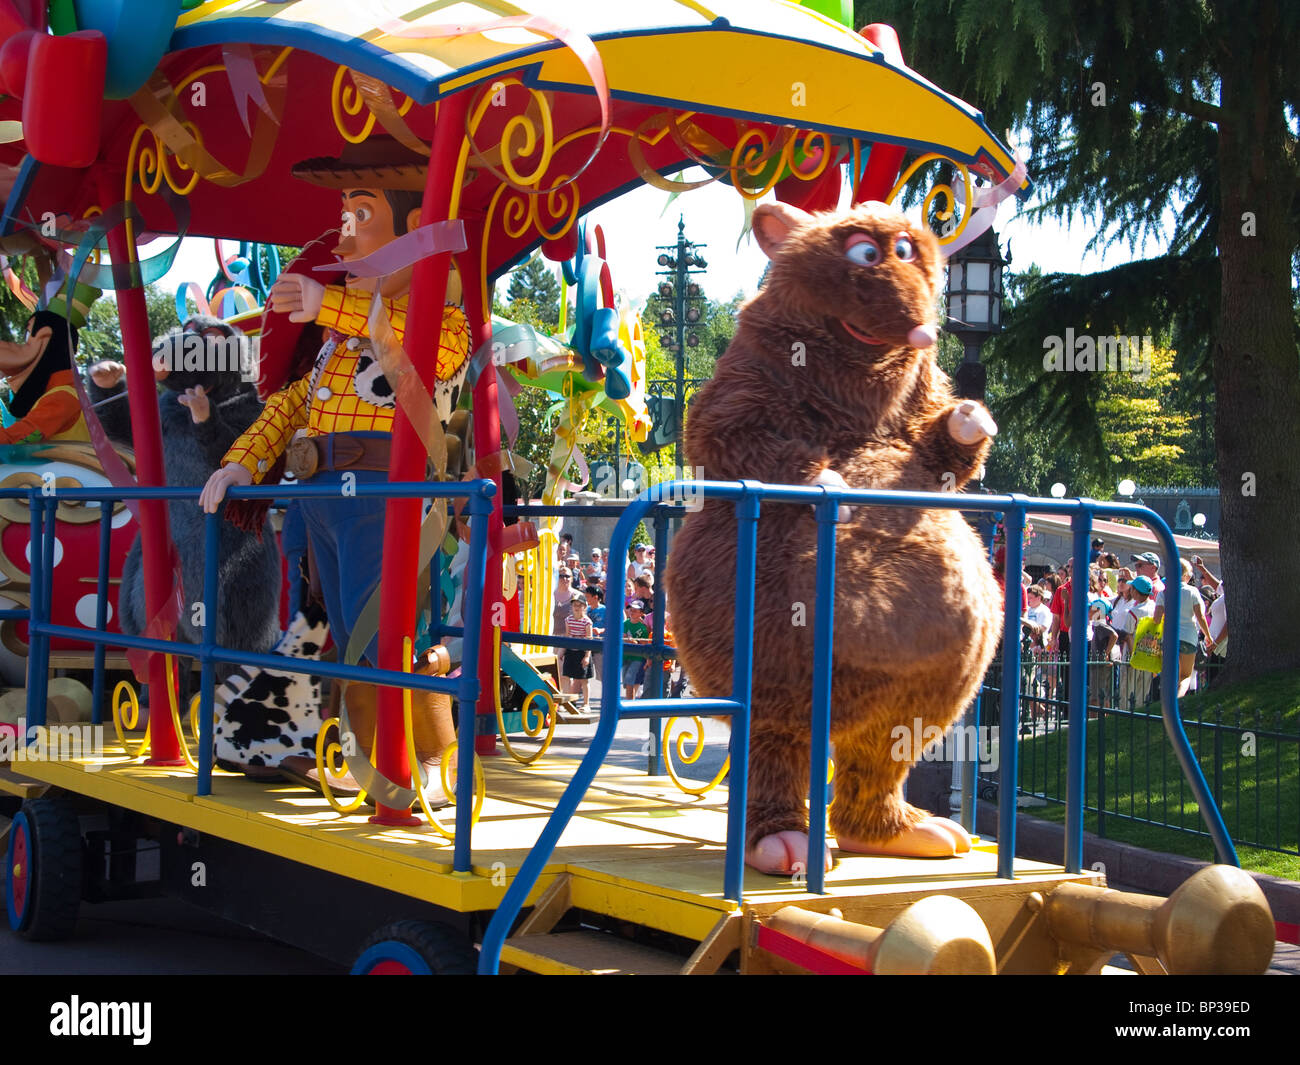 Disney Parade, Disneyland Paris Stock Photo